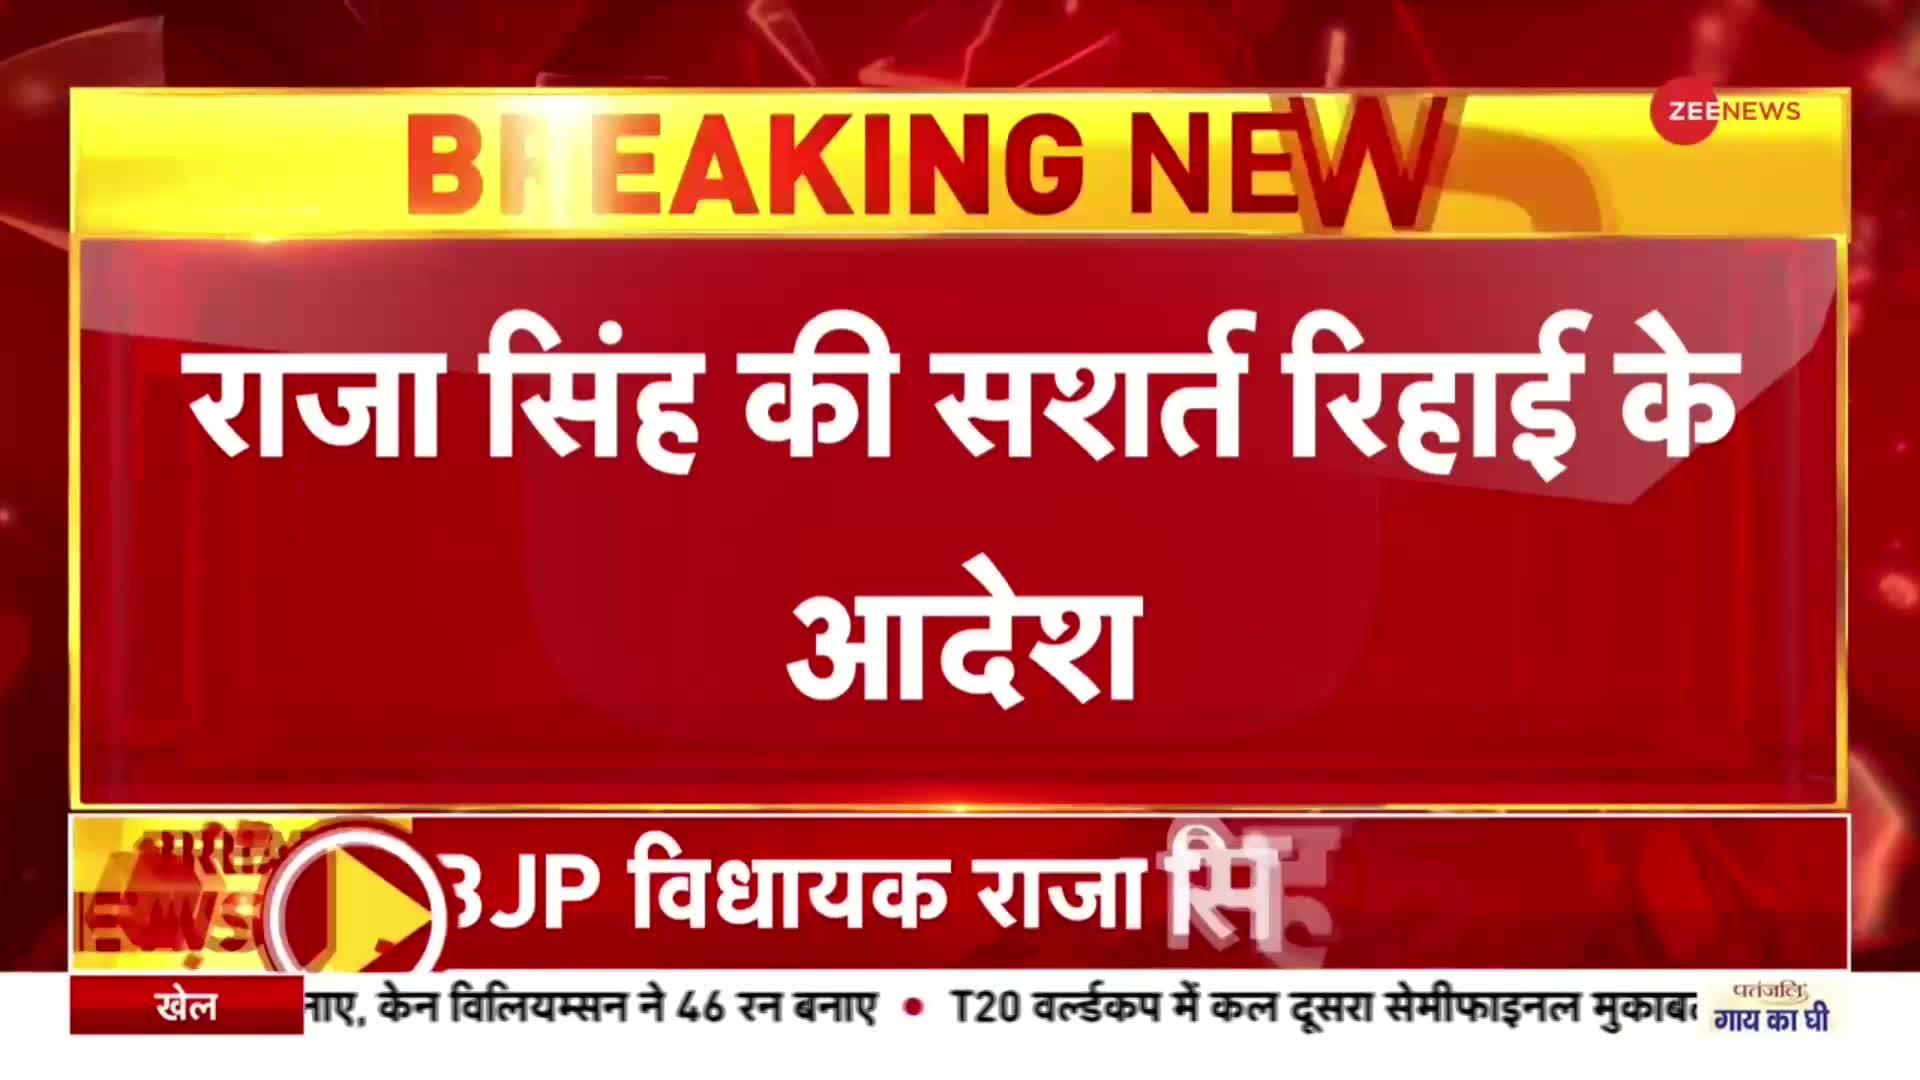 Breaking News : बीजेपी विधायक टी राजा सिंह को मिली जमानत